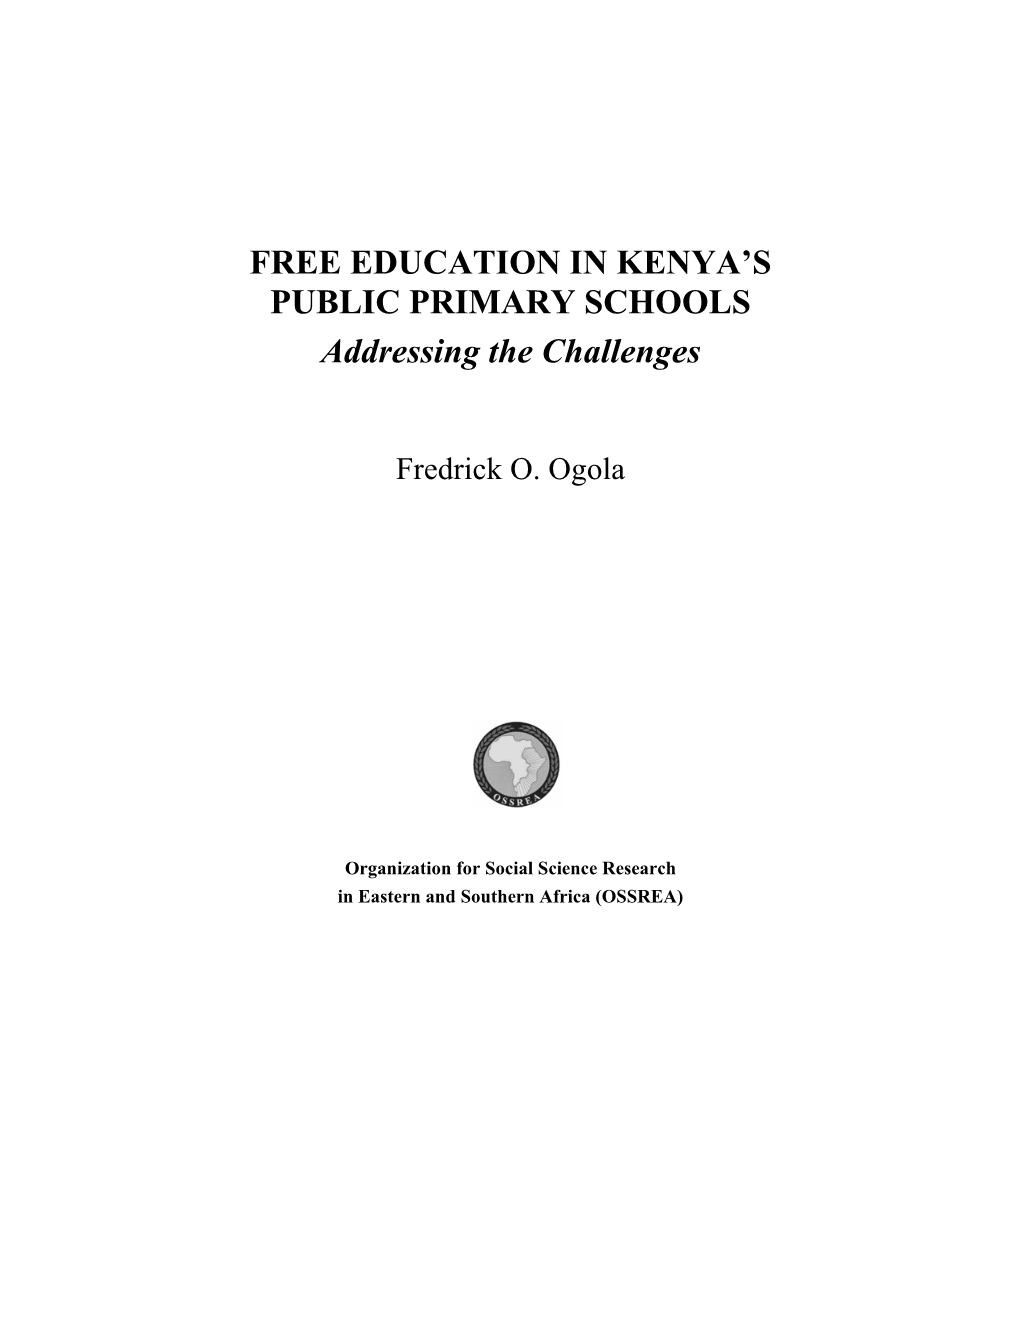 Free Education in Kenya's Public Primary Schools